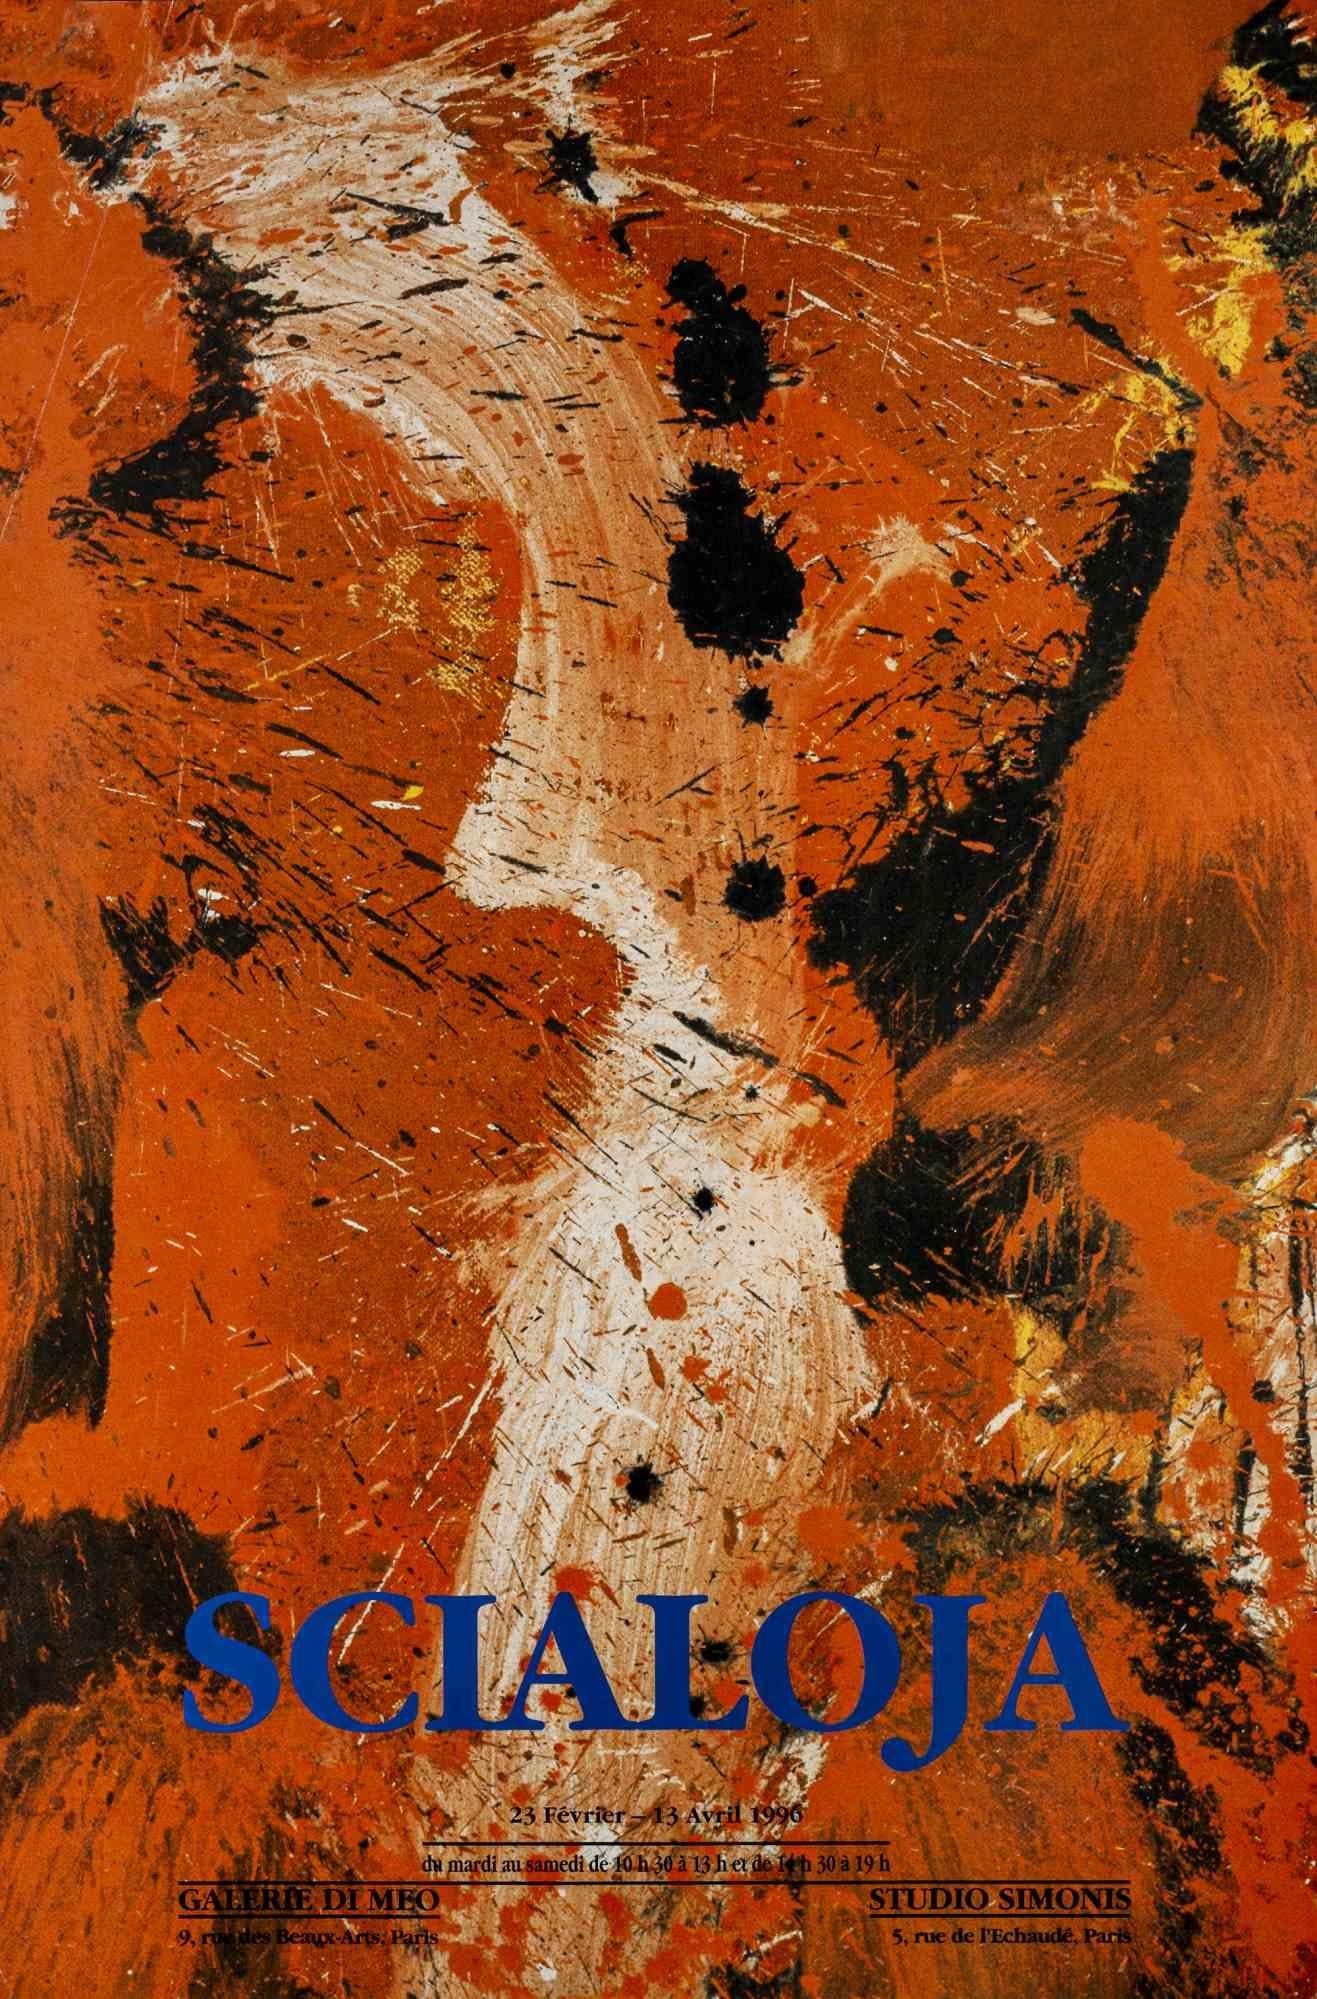 Abstract Print Toti Scialoja - Scialoja - Affiche d'exposition Galerie Di Meo - 1996